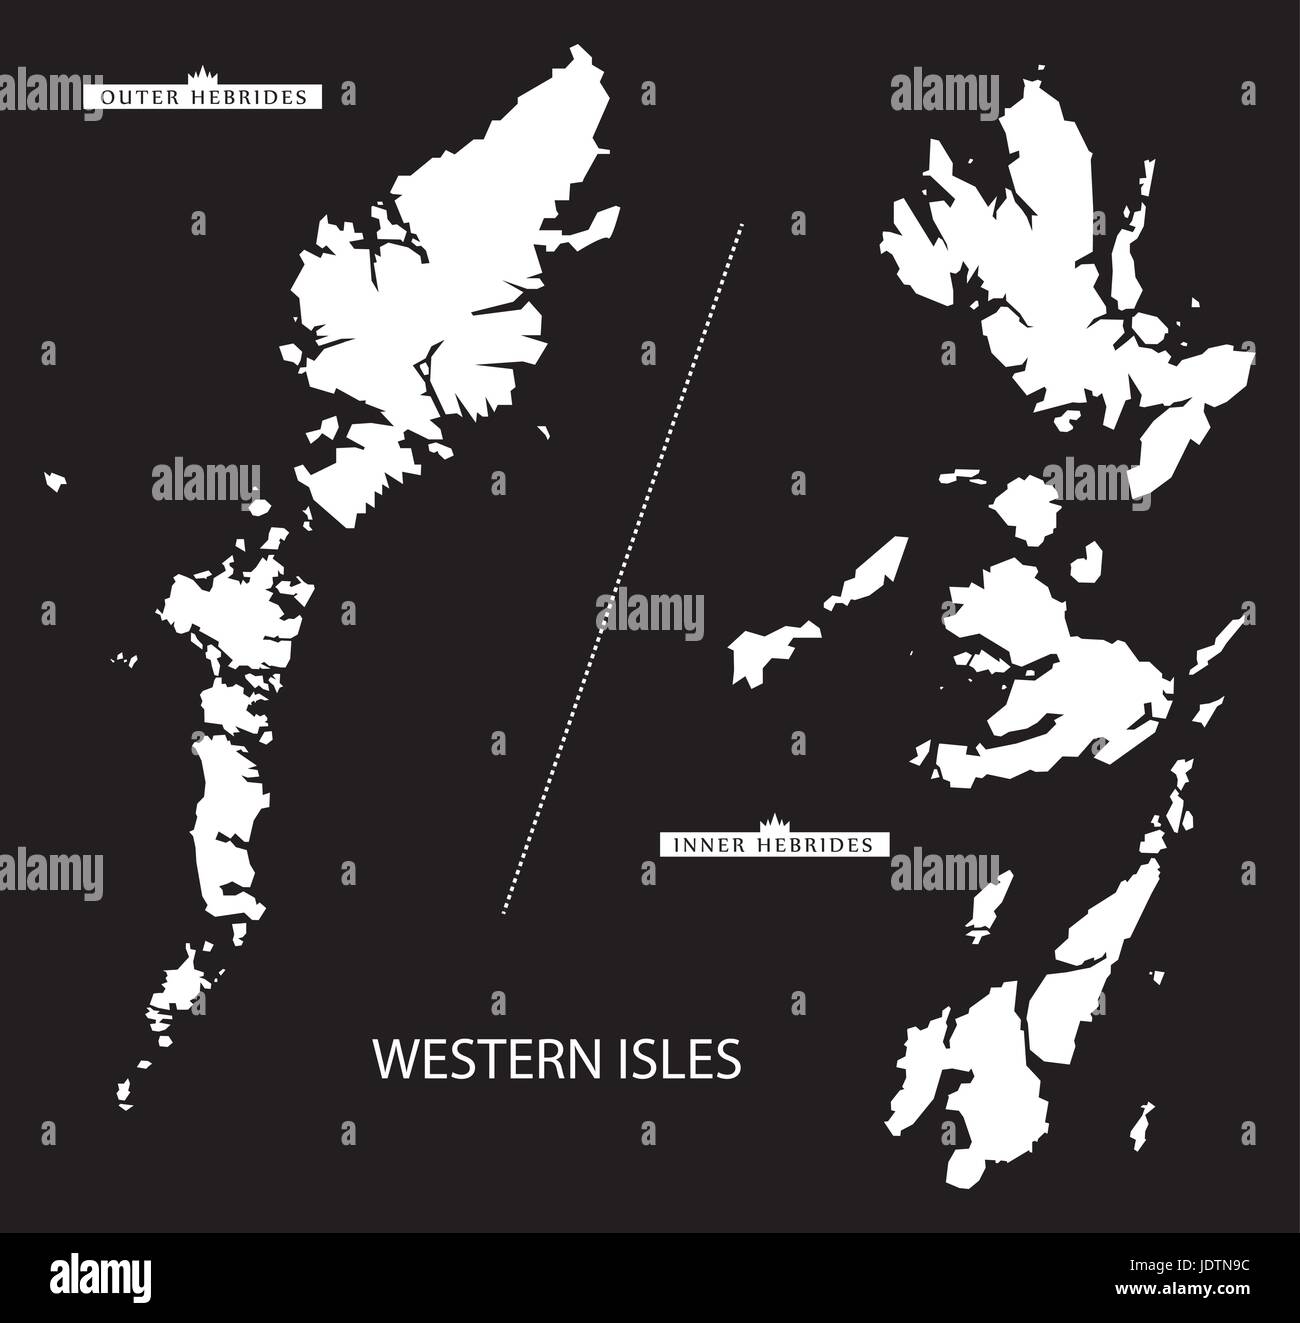 Western Isles of Scotland Karte schwarze Silhouette invertierte Darstellung Stock Vektor